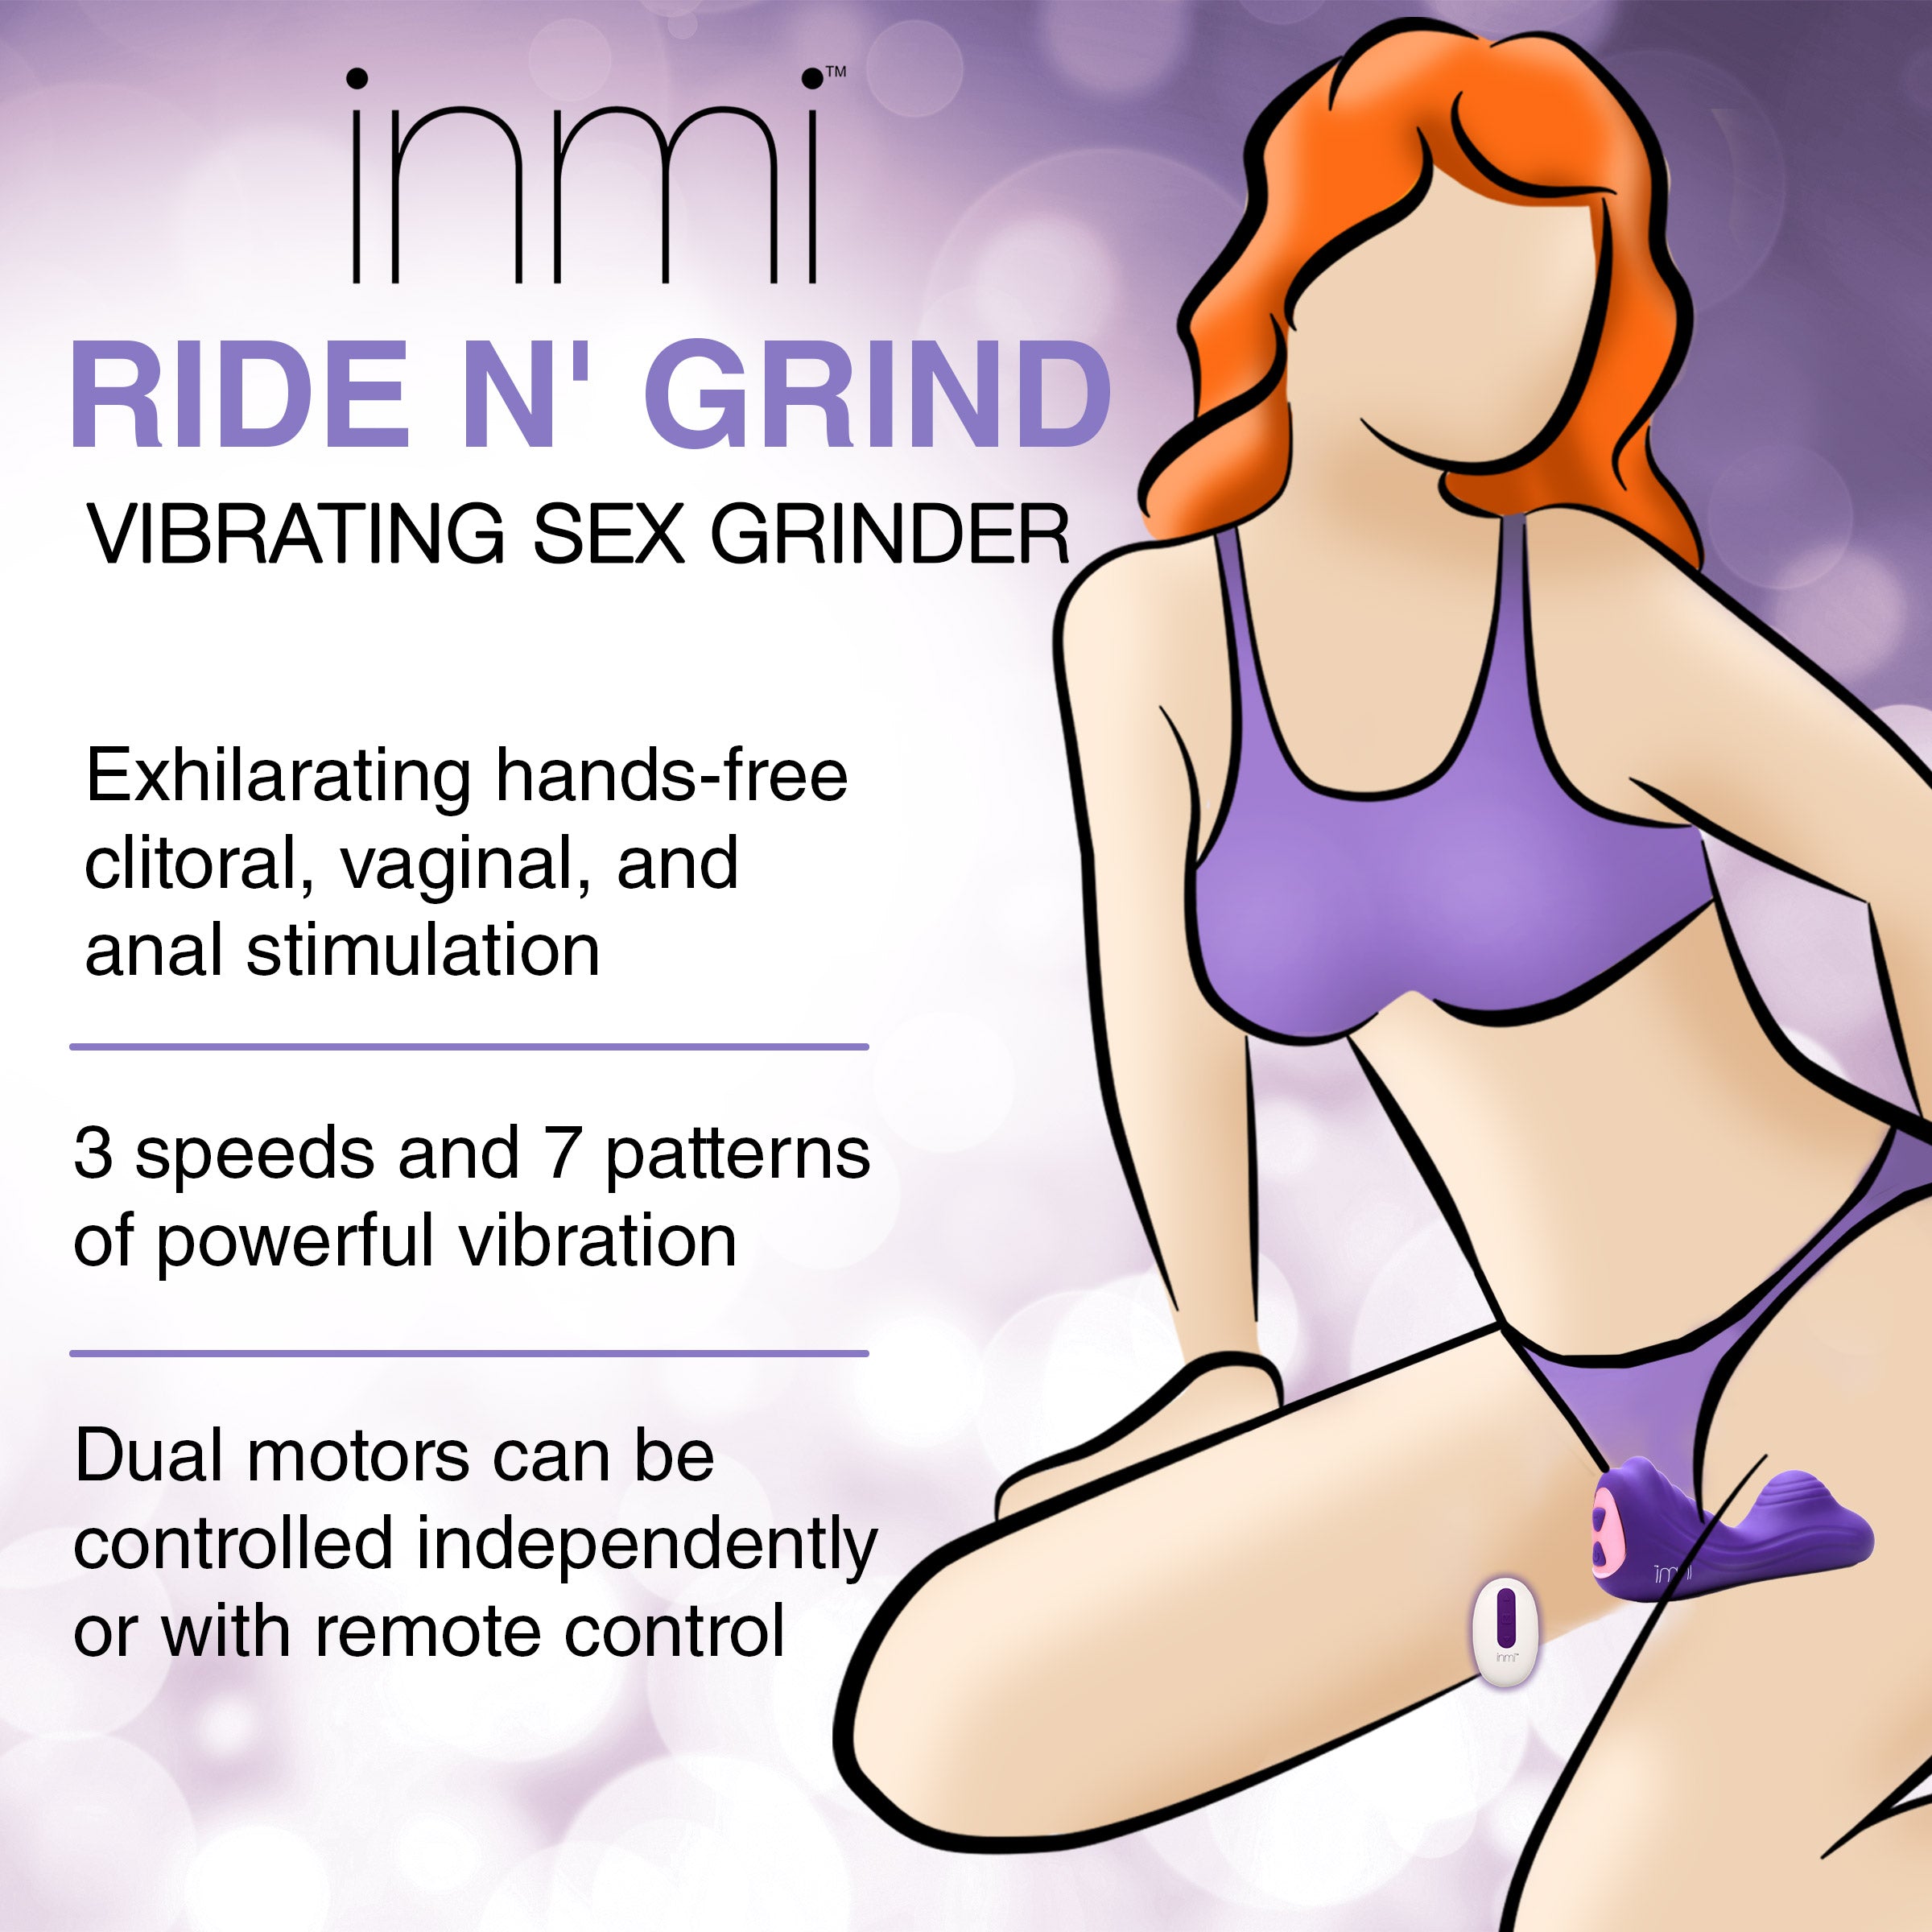 Ride n' Grind 10 X Vibrating Silicone Sex Grinder